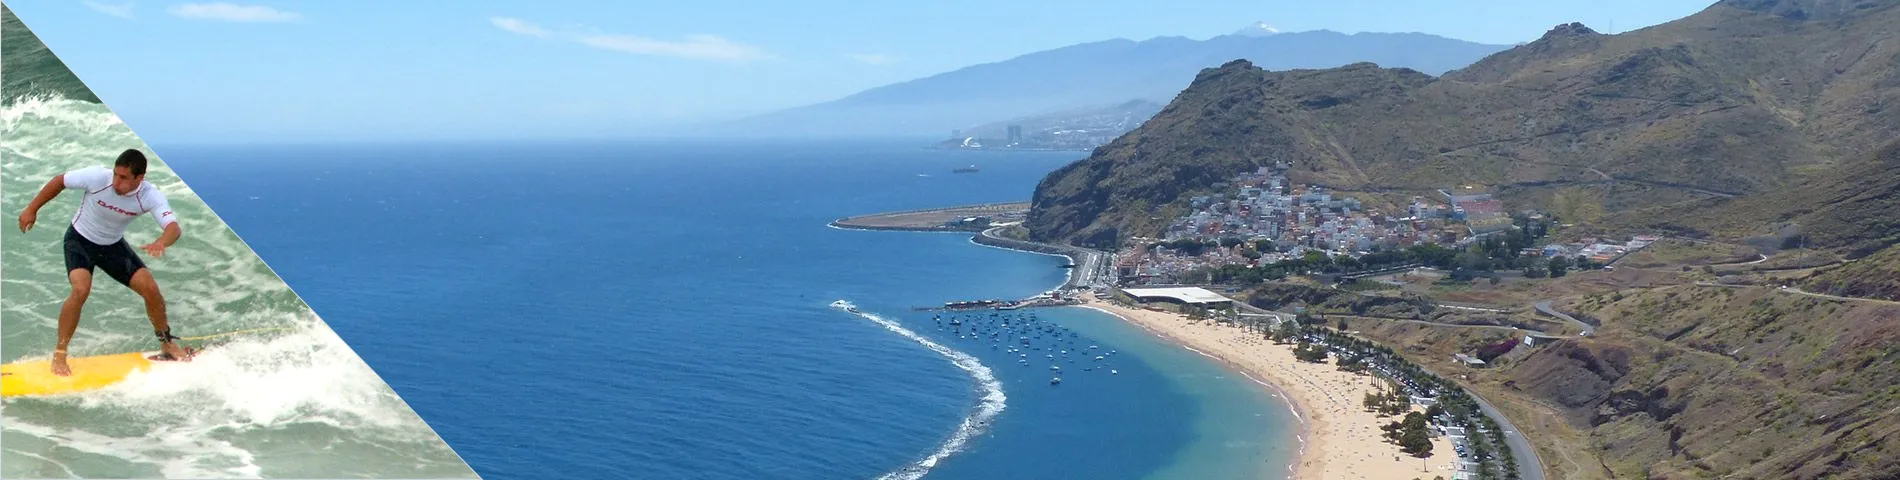 Tenerife - Español + Surf